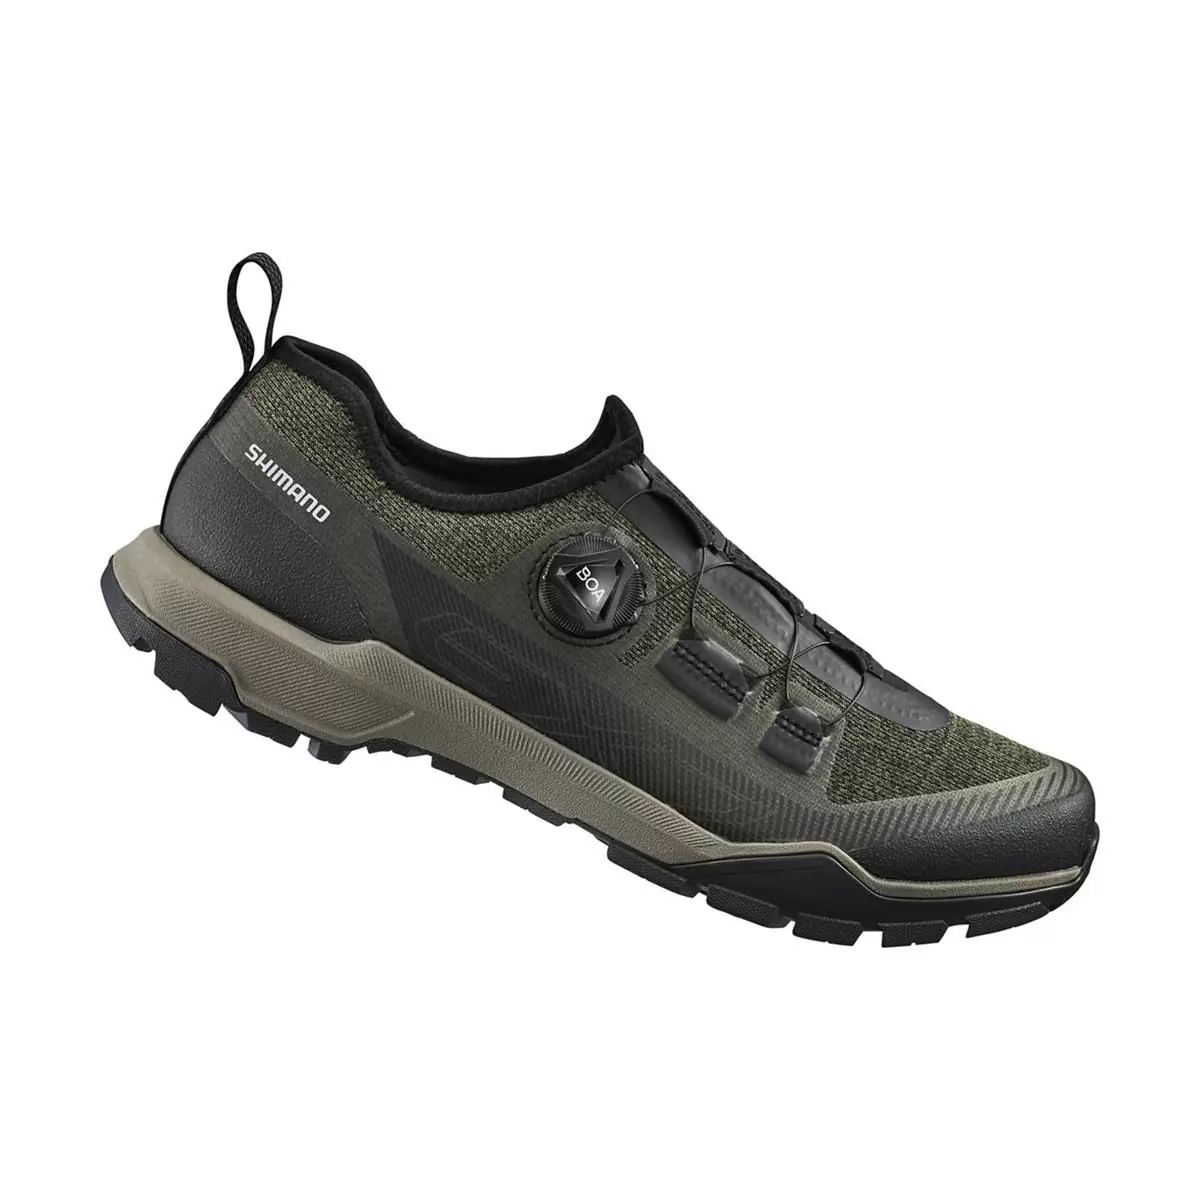 Trekking / MTB Shoes SH-EX700 Green Size 48 - image